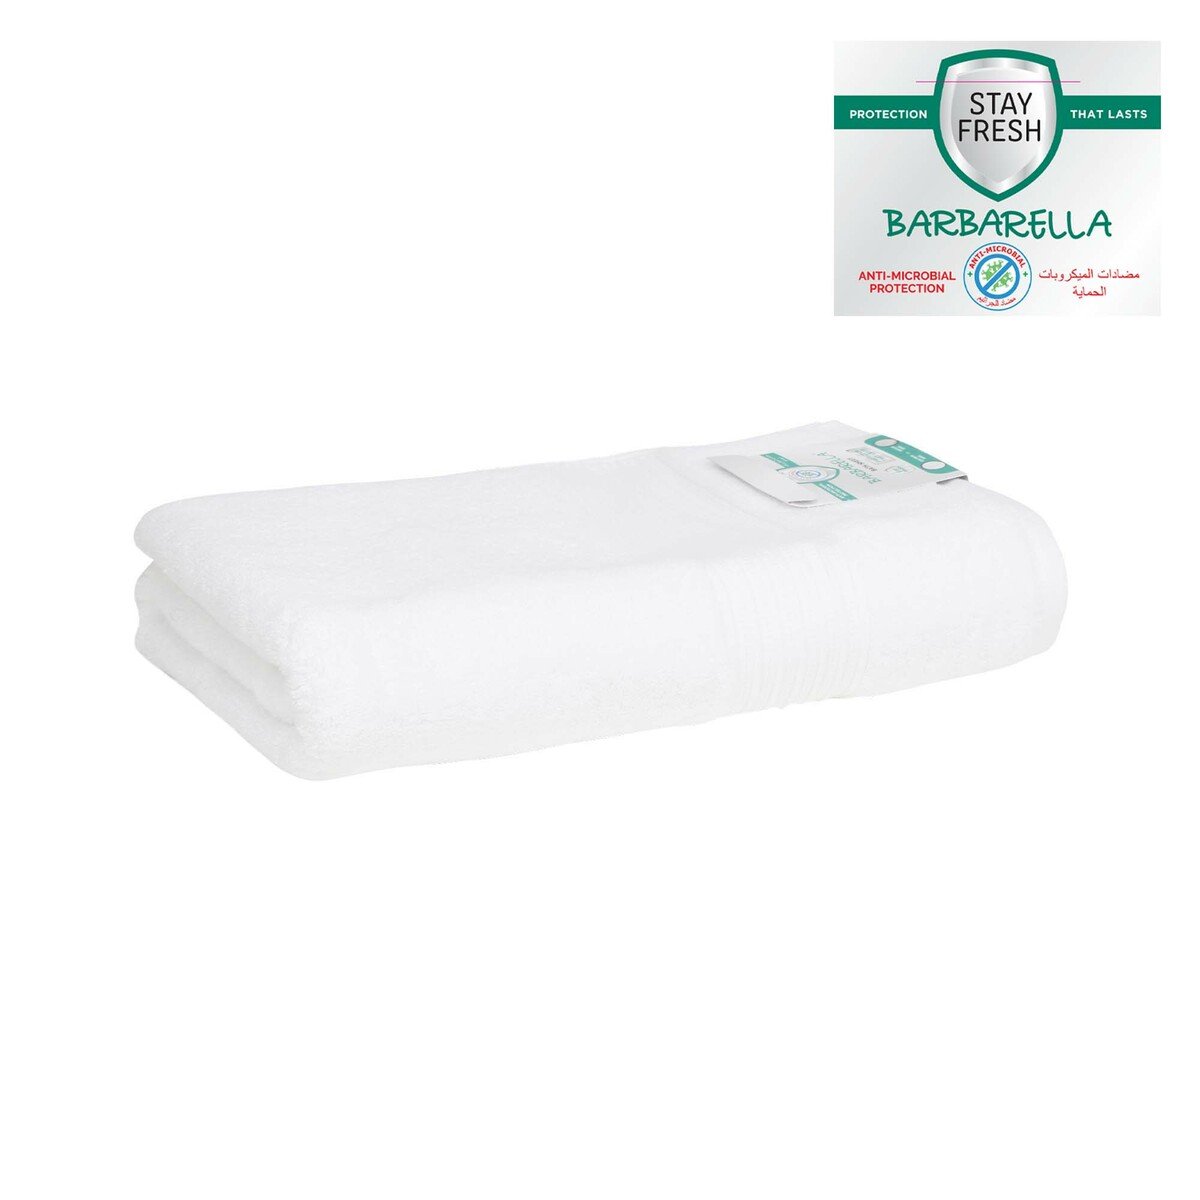 Barbarella Anti-Microbial Bath Towel 84x160cm White